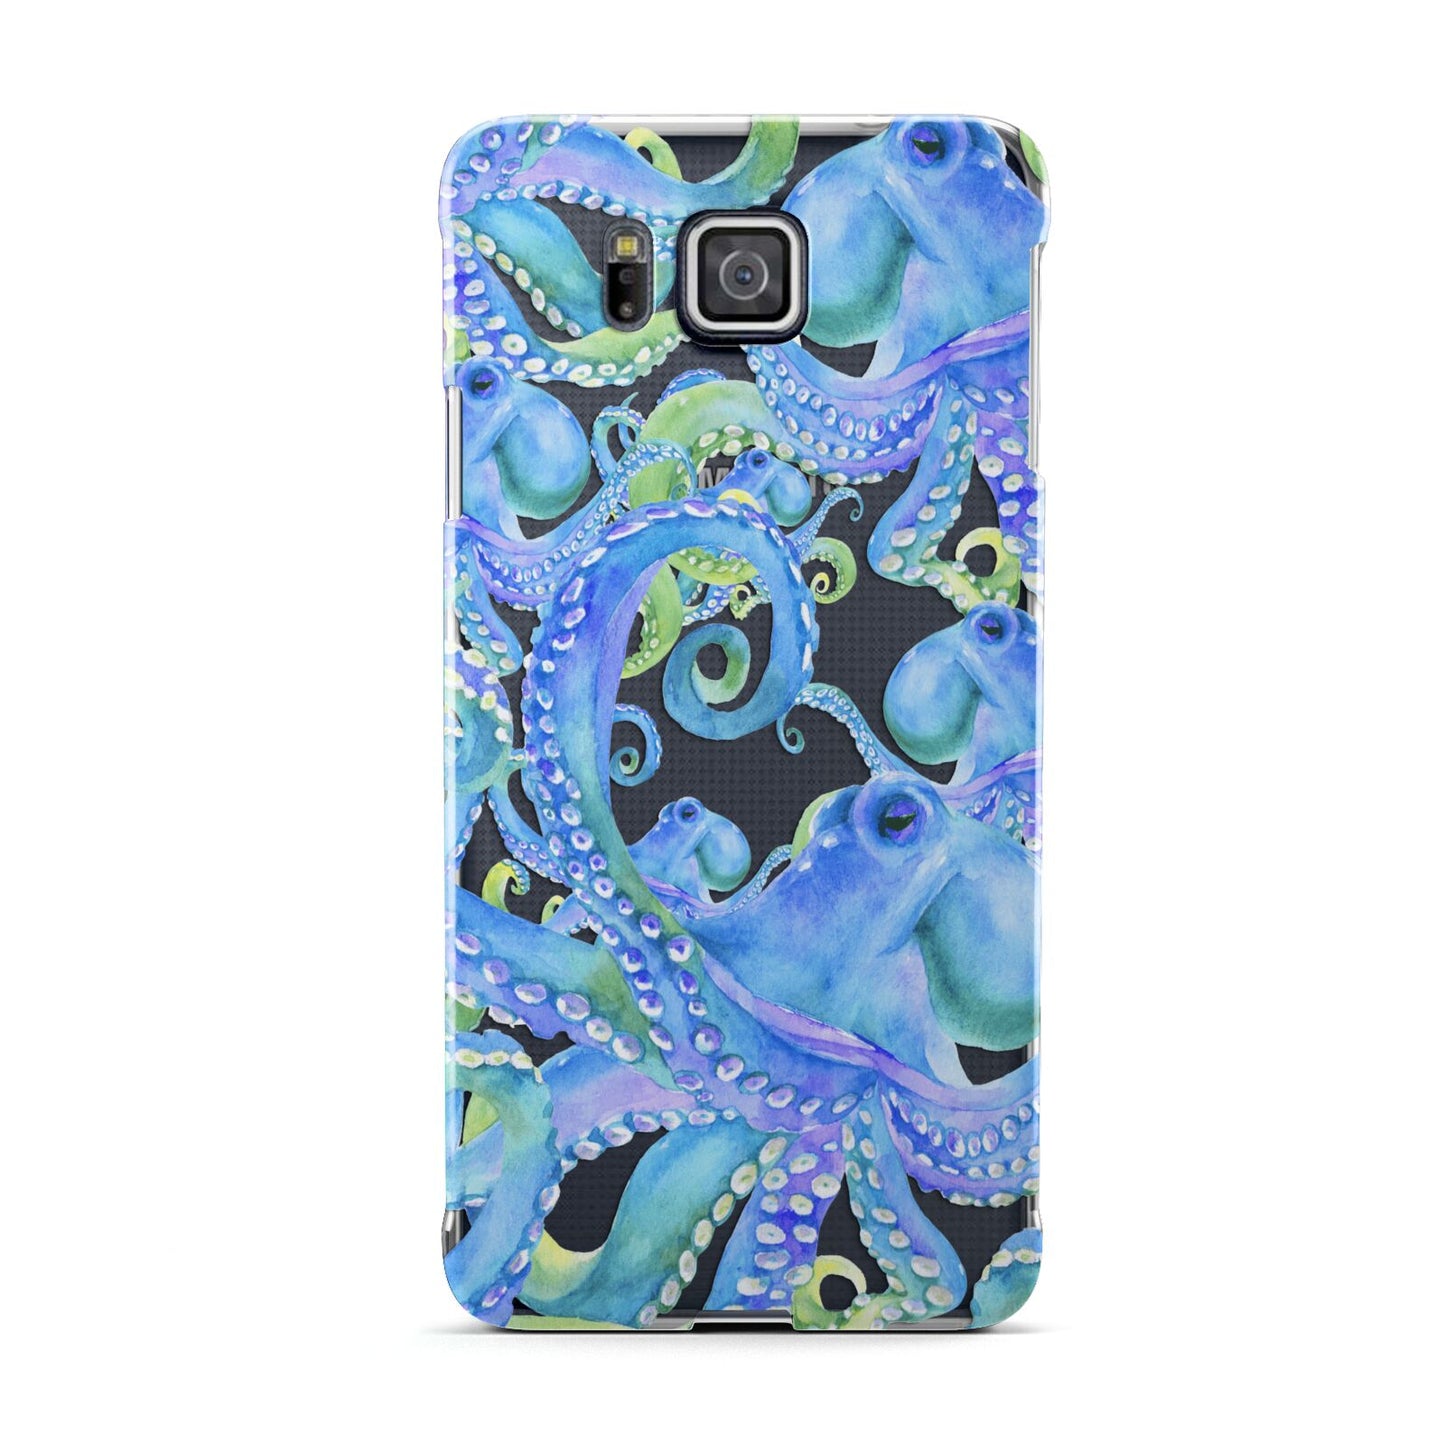 Octopus Samsung Galaxy Alpha Case